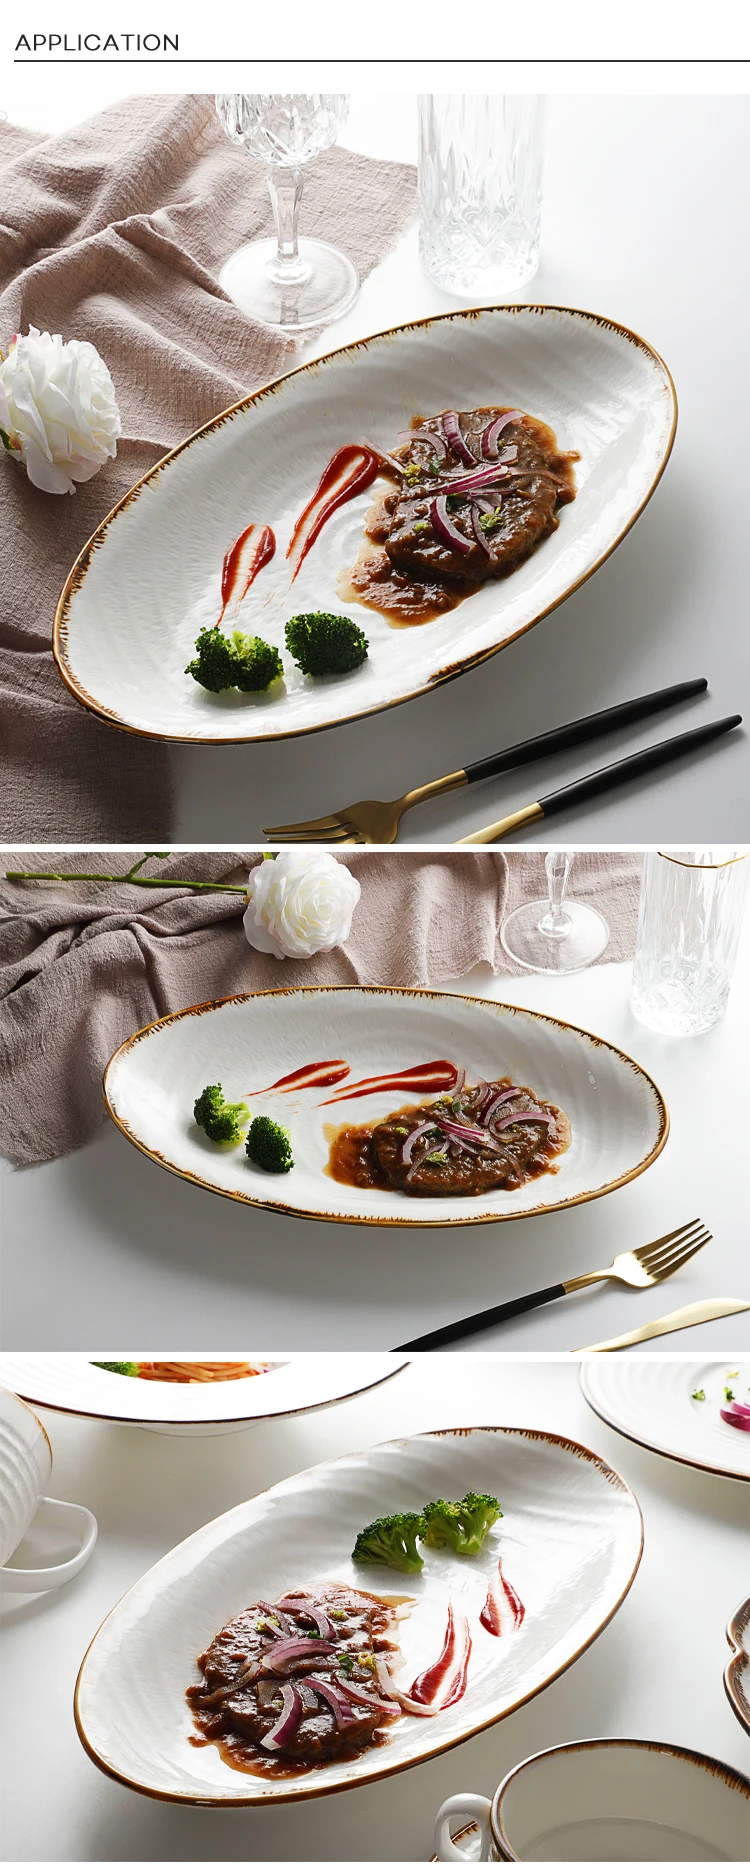 Popular Wedding Restaurant Oval Dish, Catering Oval Serving Platter, Strong Hotel Restaurant Porcelain Oval Plate&